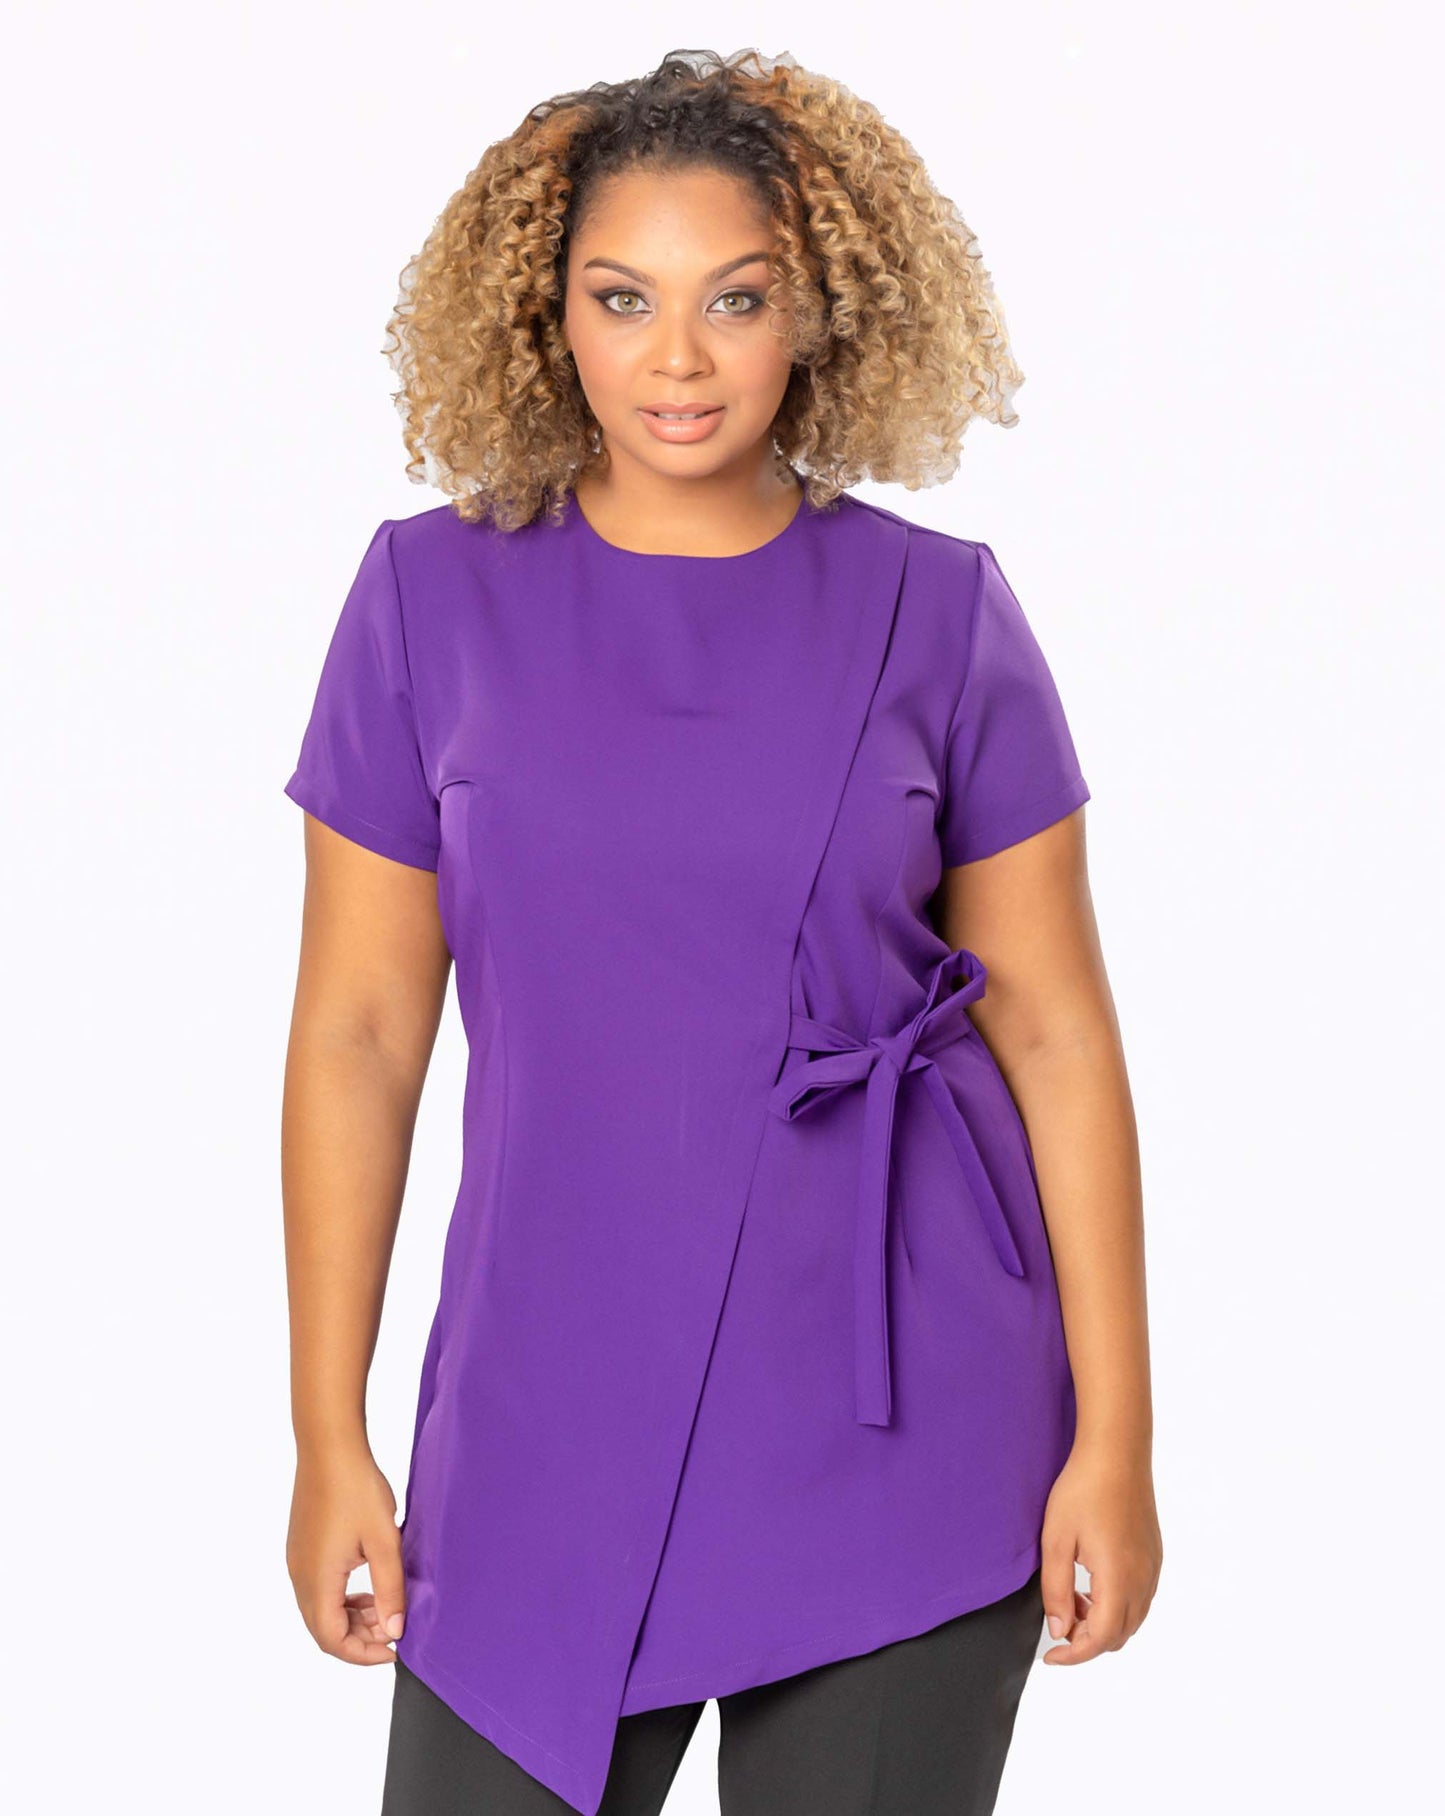 Tranquility Asymmetric Beauty Tunic - Purple (Superior 4-Way Stretch)